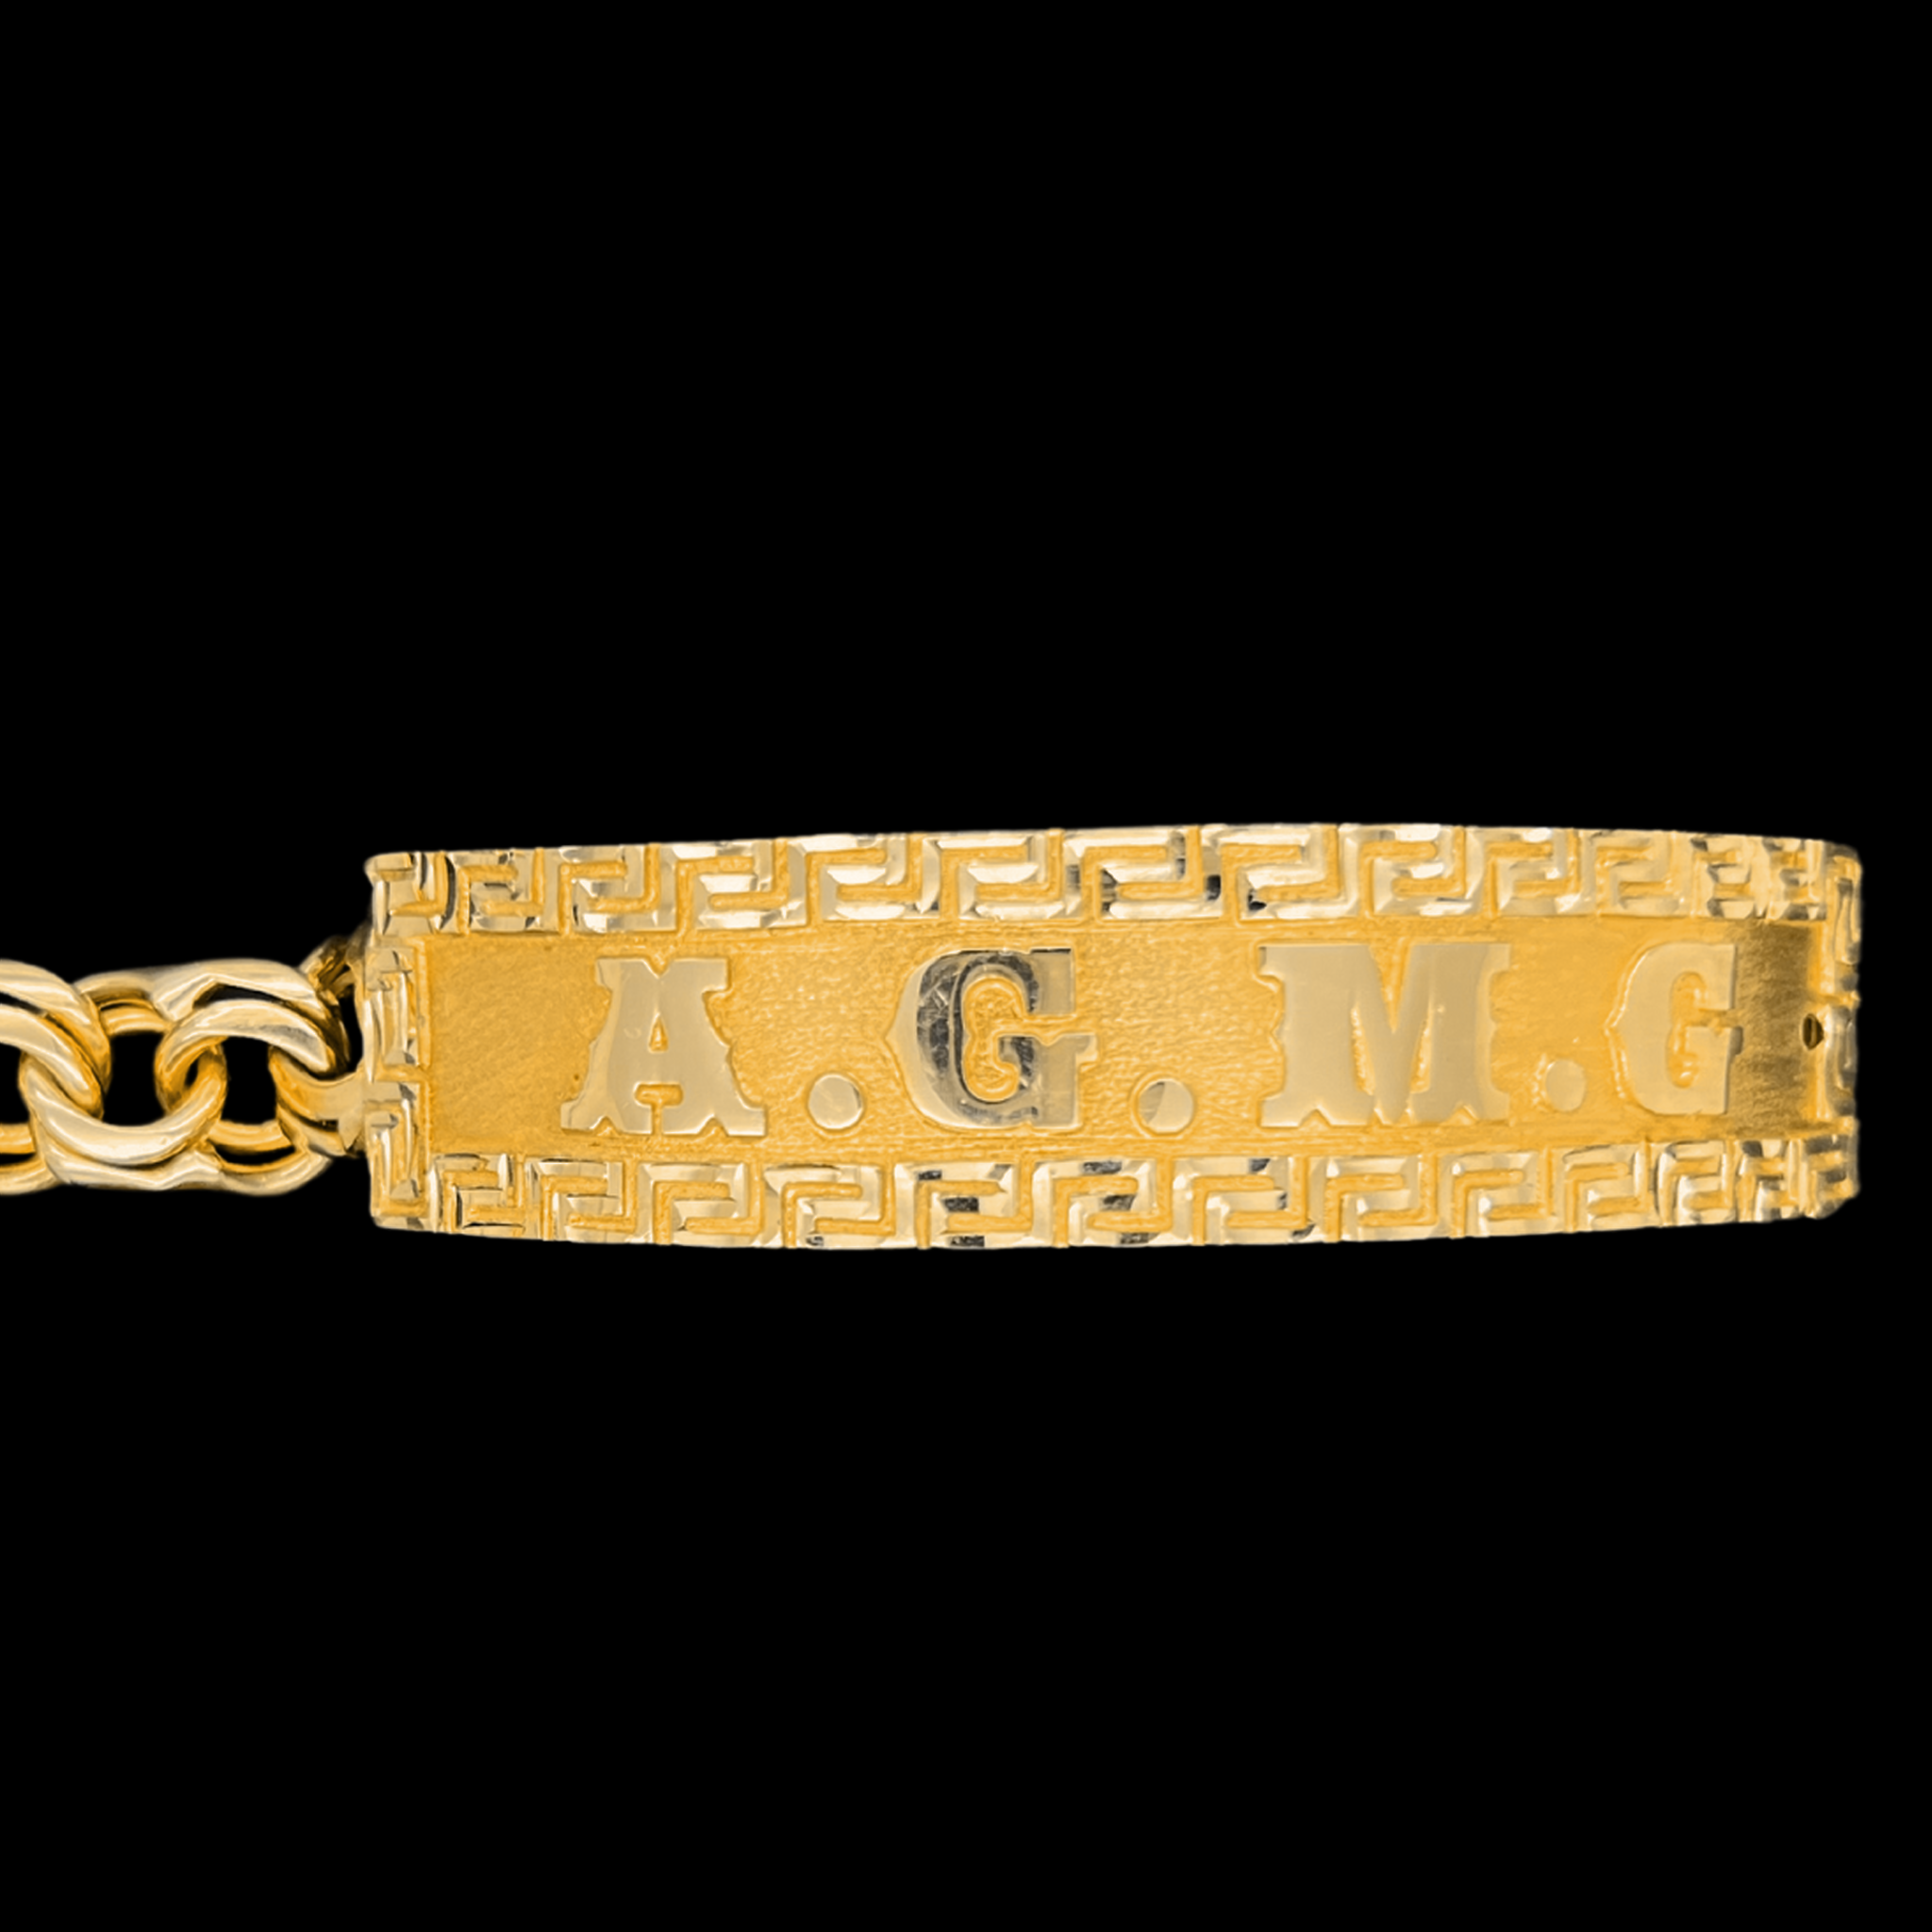 10KT Gold Ladies Chino Link Bracelet with Diamond Cut Greek Border and Plain Letters/Esclava Tejido Chino para Mujer en Oro 10KT con Bicel Grecas Diamantado, Letras Lisas